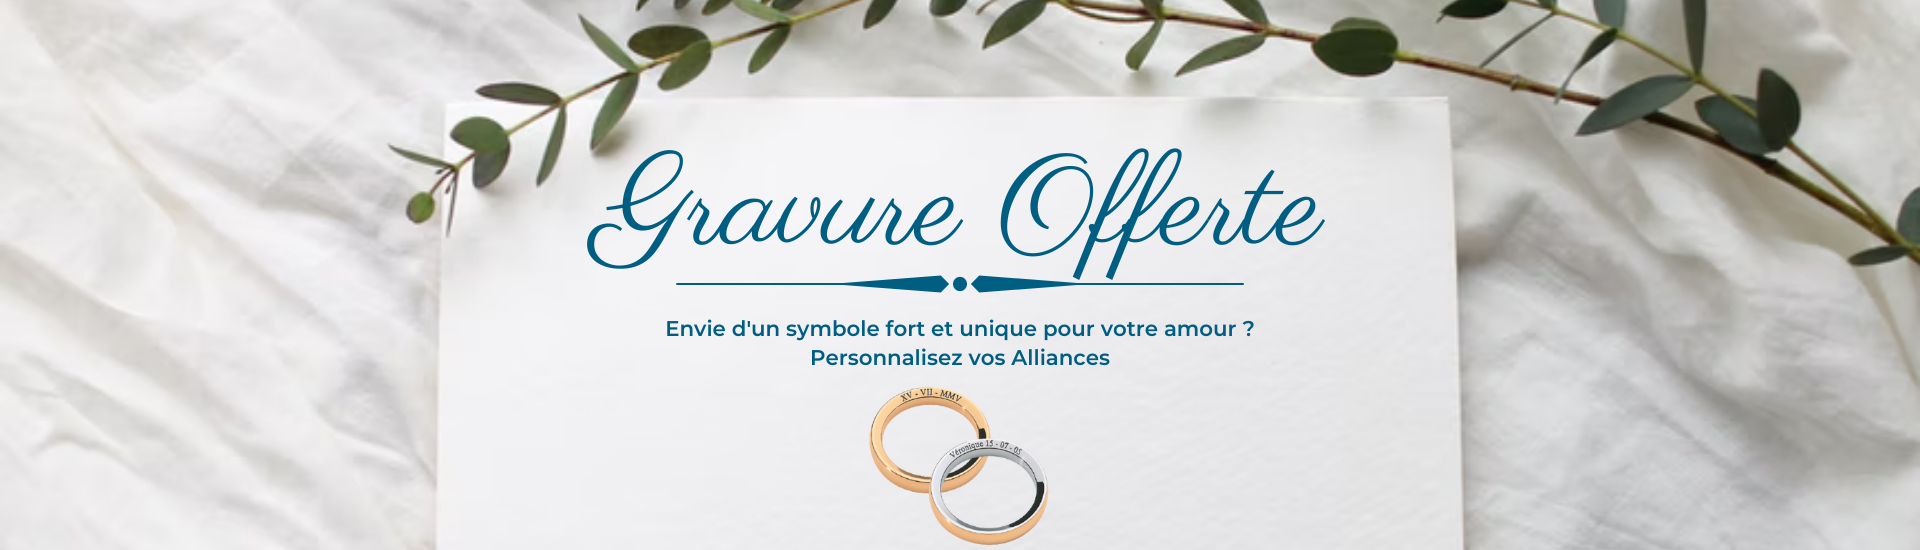 Gravure-alliance-Offerte-creator-bijouterie-orleans1-1